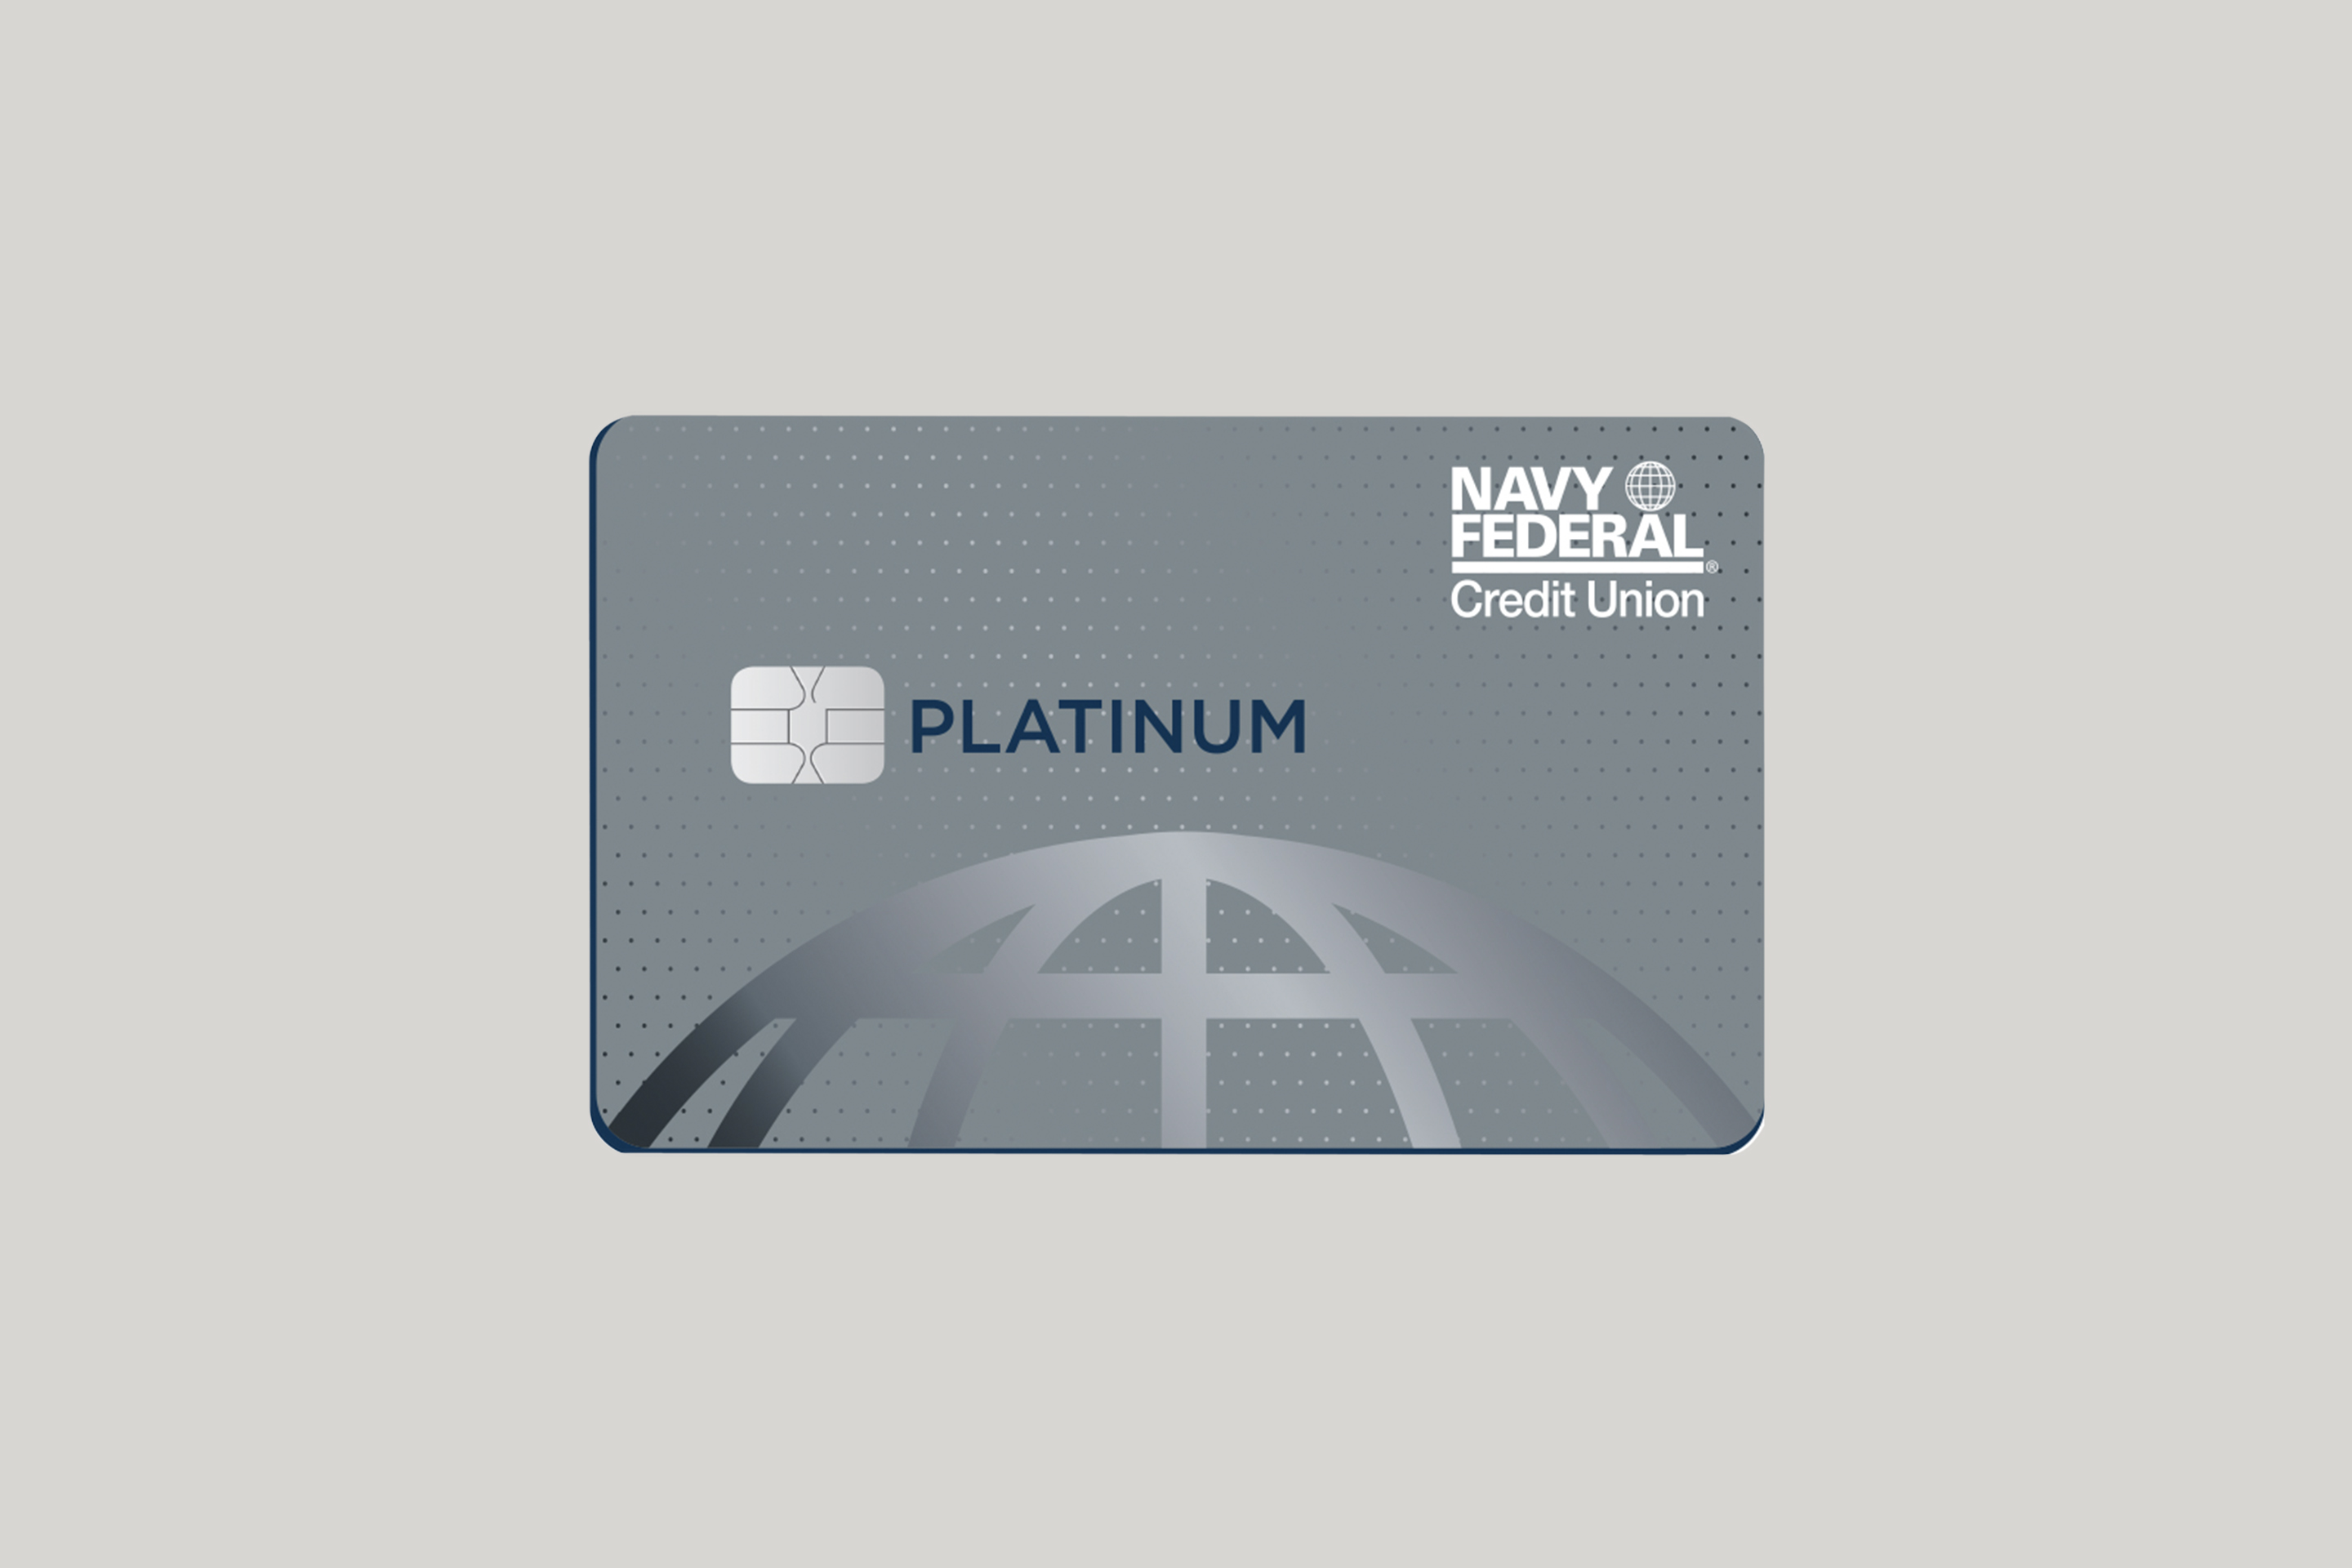 Navy Federal Credit UnionÂ® Platinum Credit Card